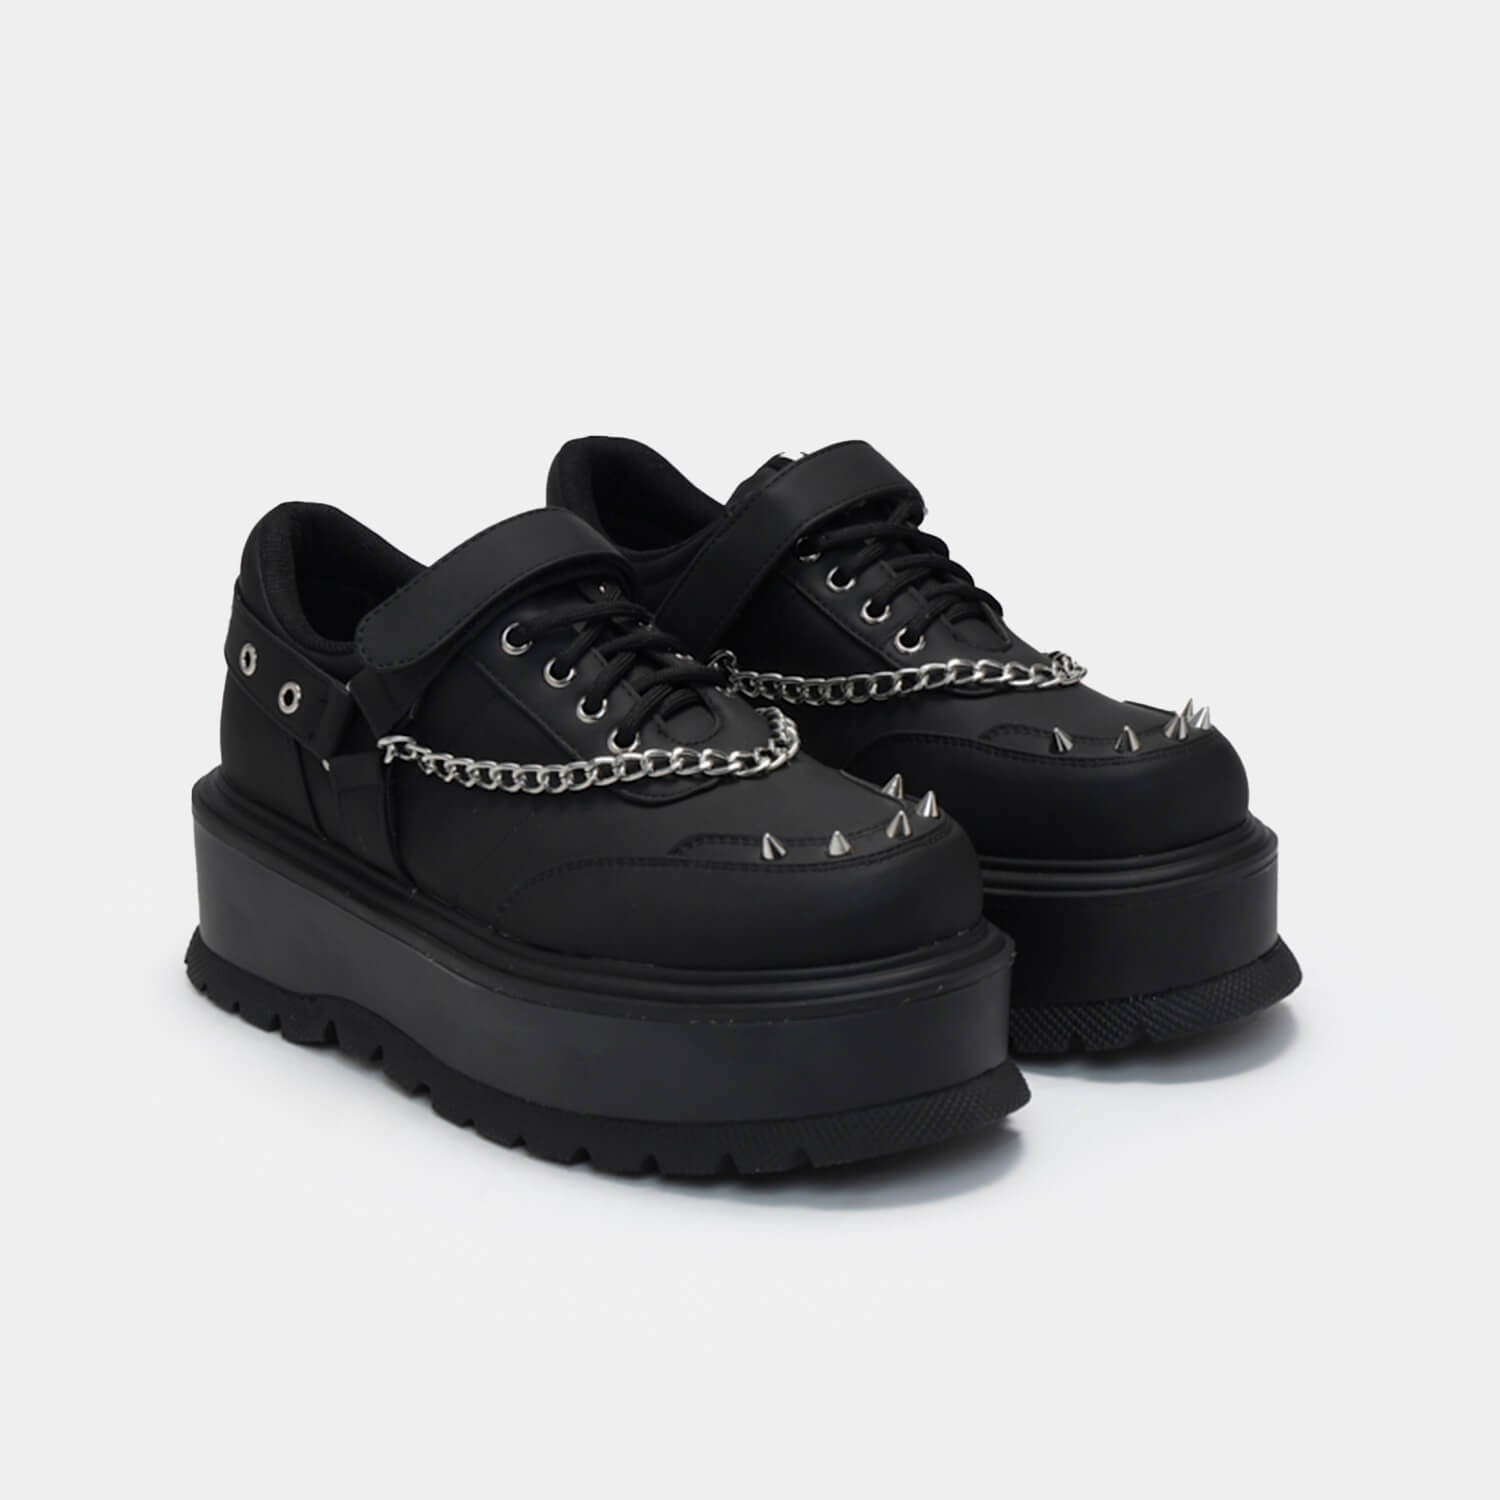 Retrograde Rebel Black Platform Shoes - Shoes - KOI Footwear - Black - Three-Quarter View